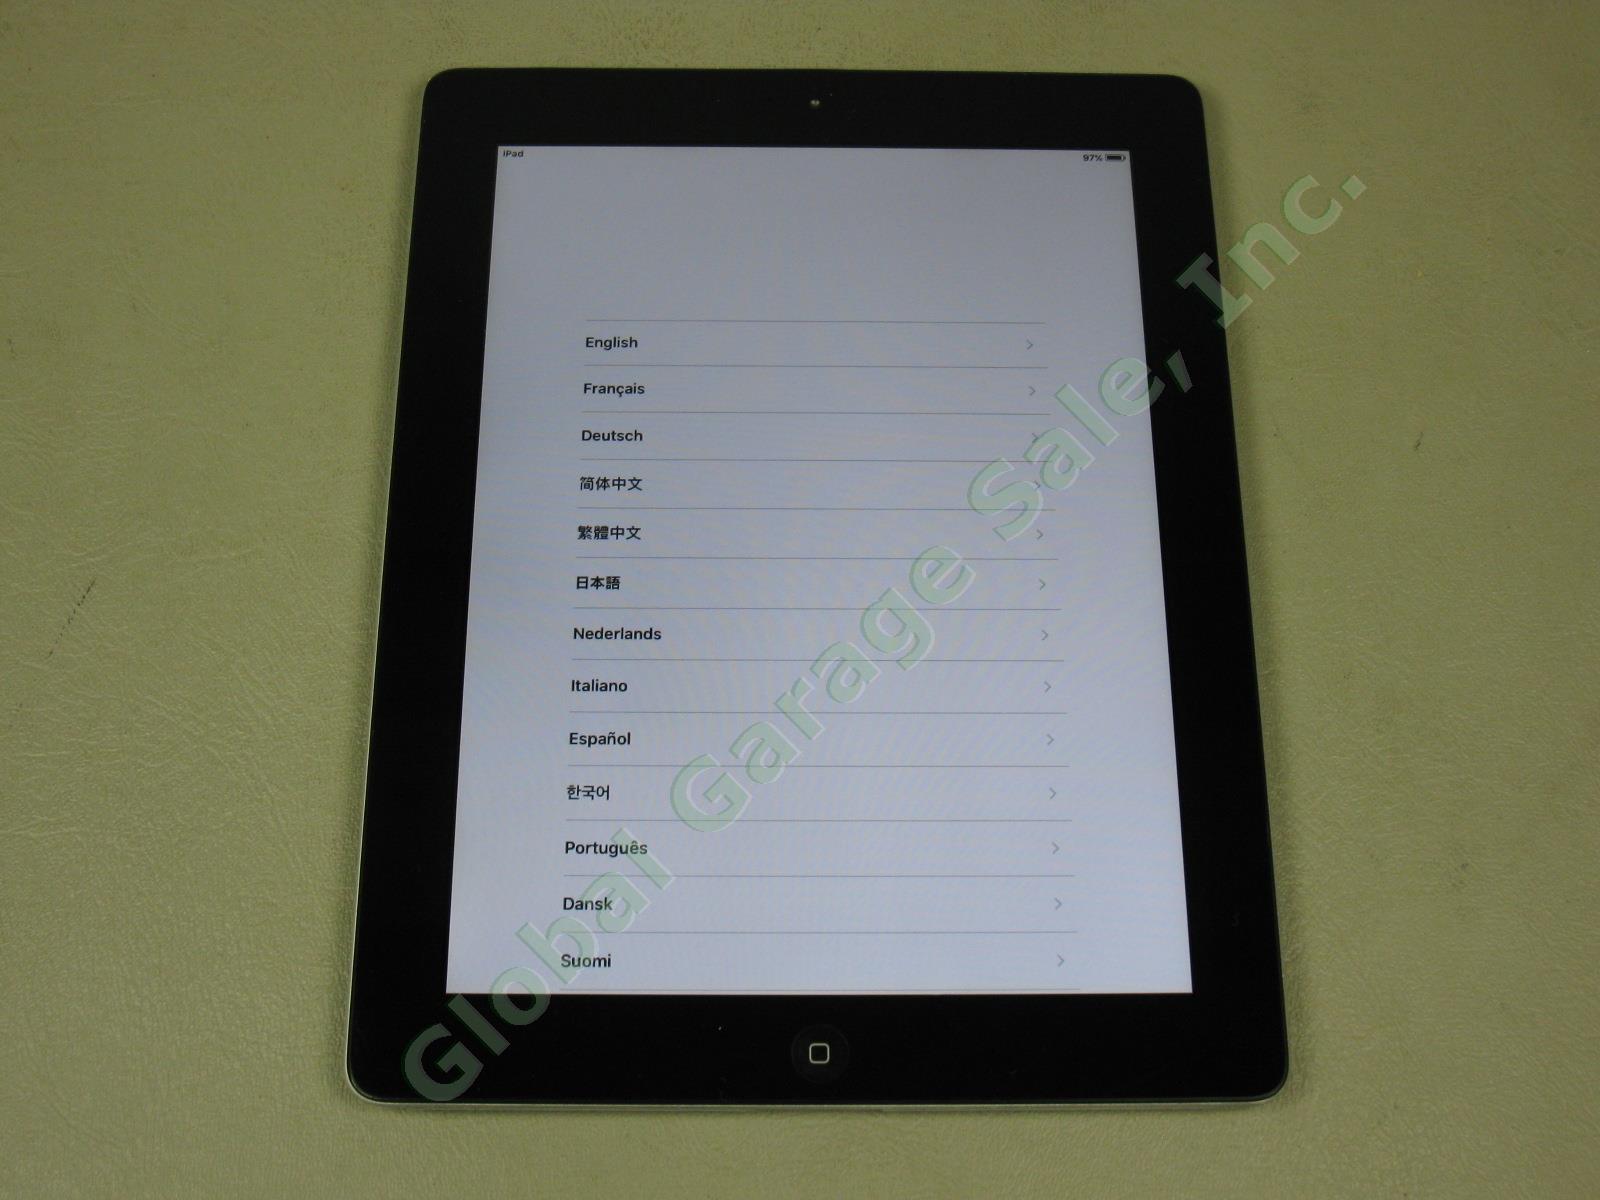 Apple iPad 2 Black Tablet 16GB Wifi Works Great Model MC770LL/A A1395 No Reserve 1